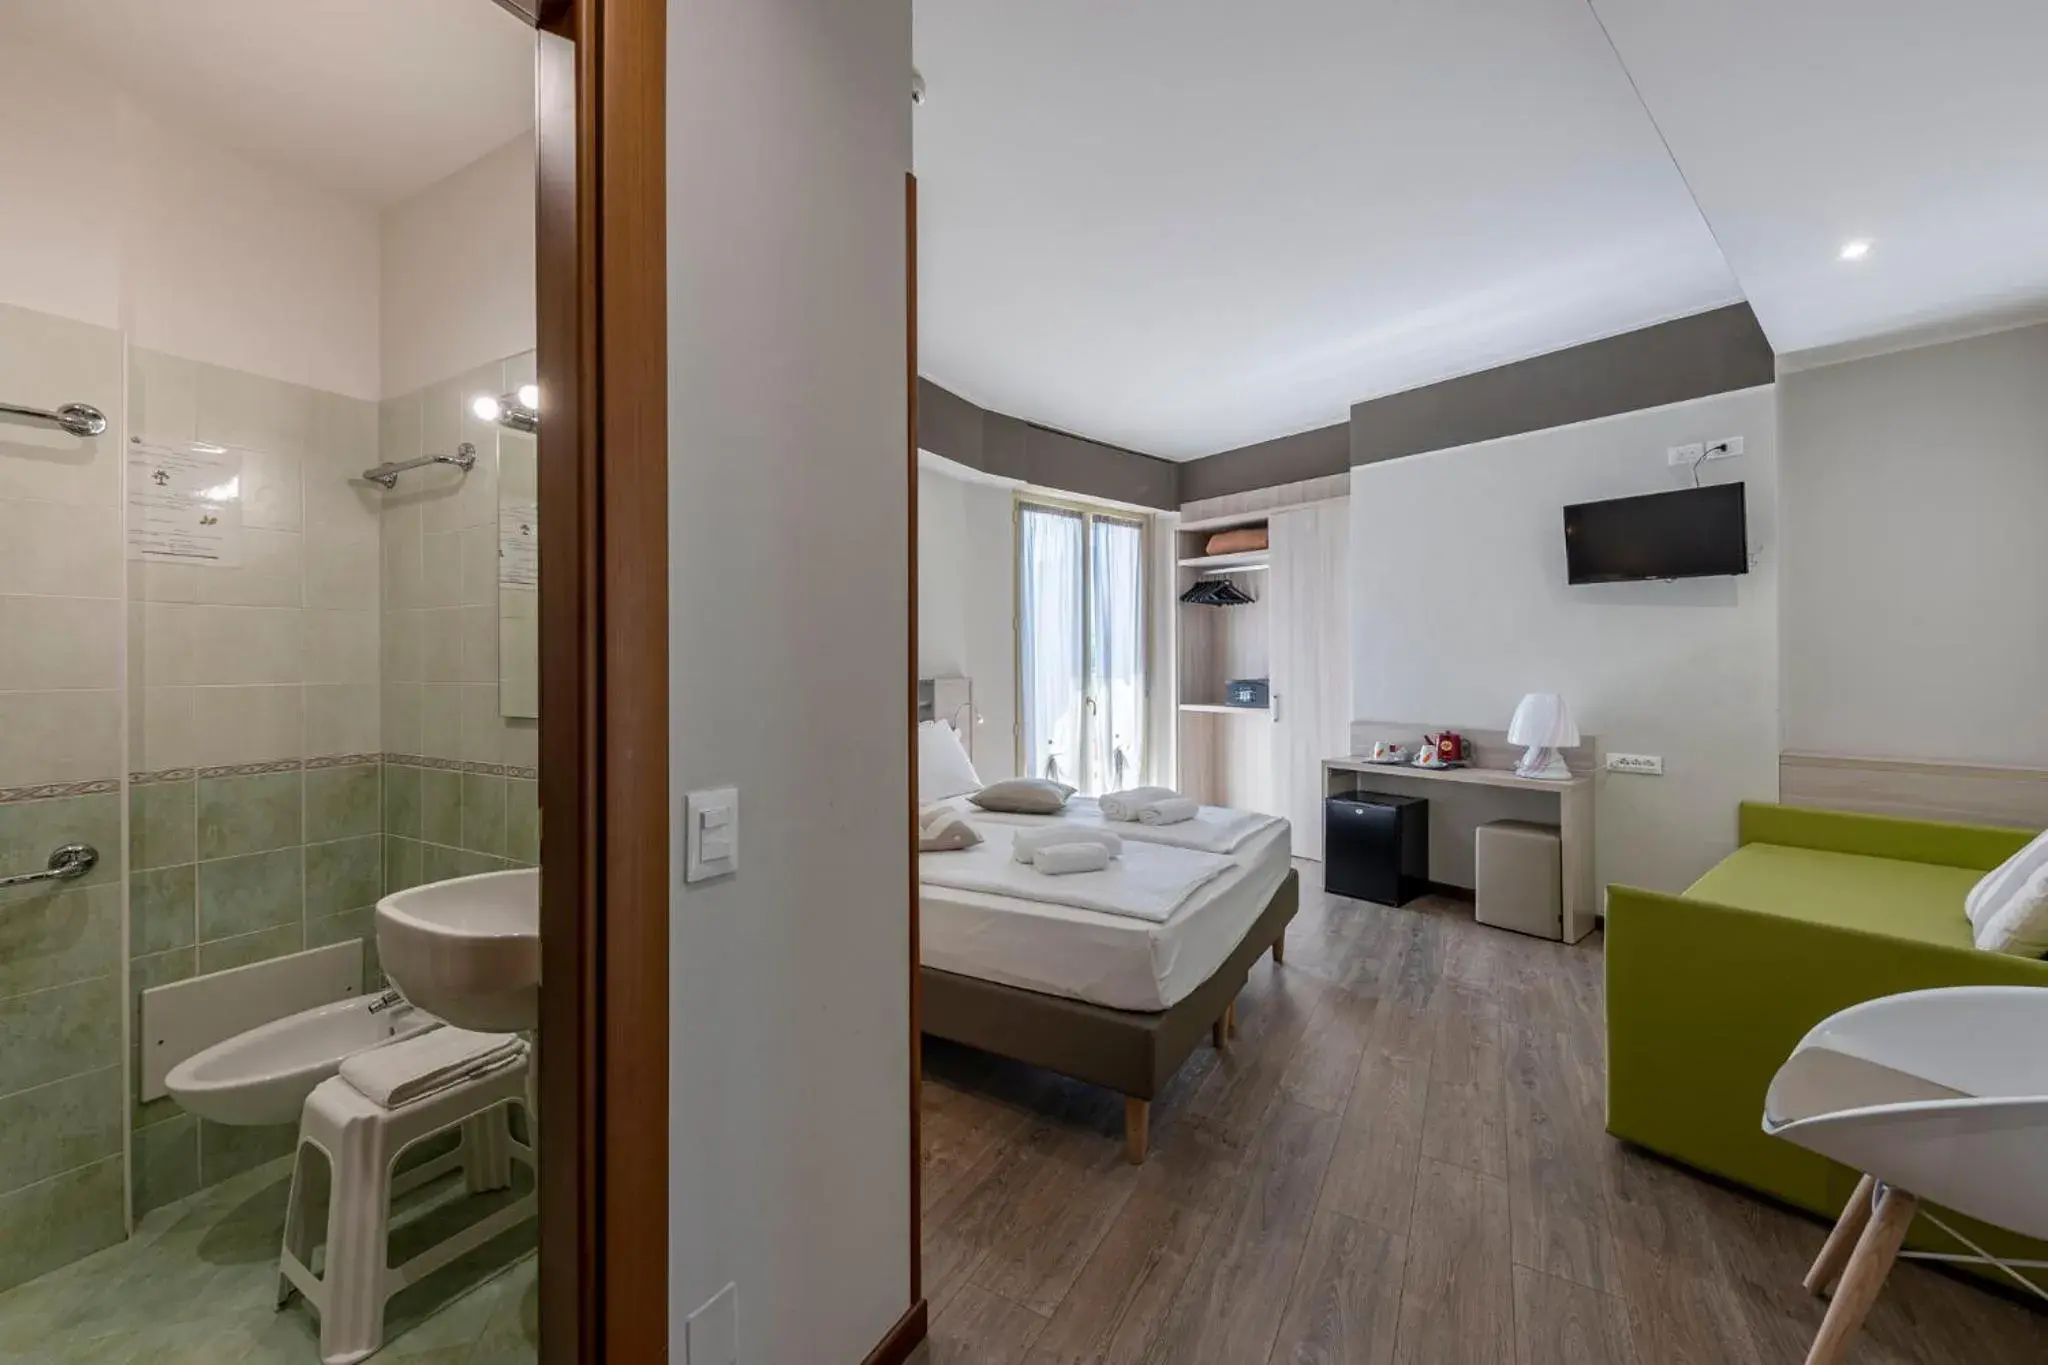 Bedroom, Bathroom in Hotel Imperial ***S